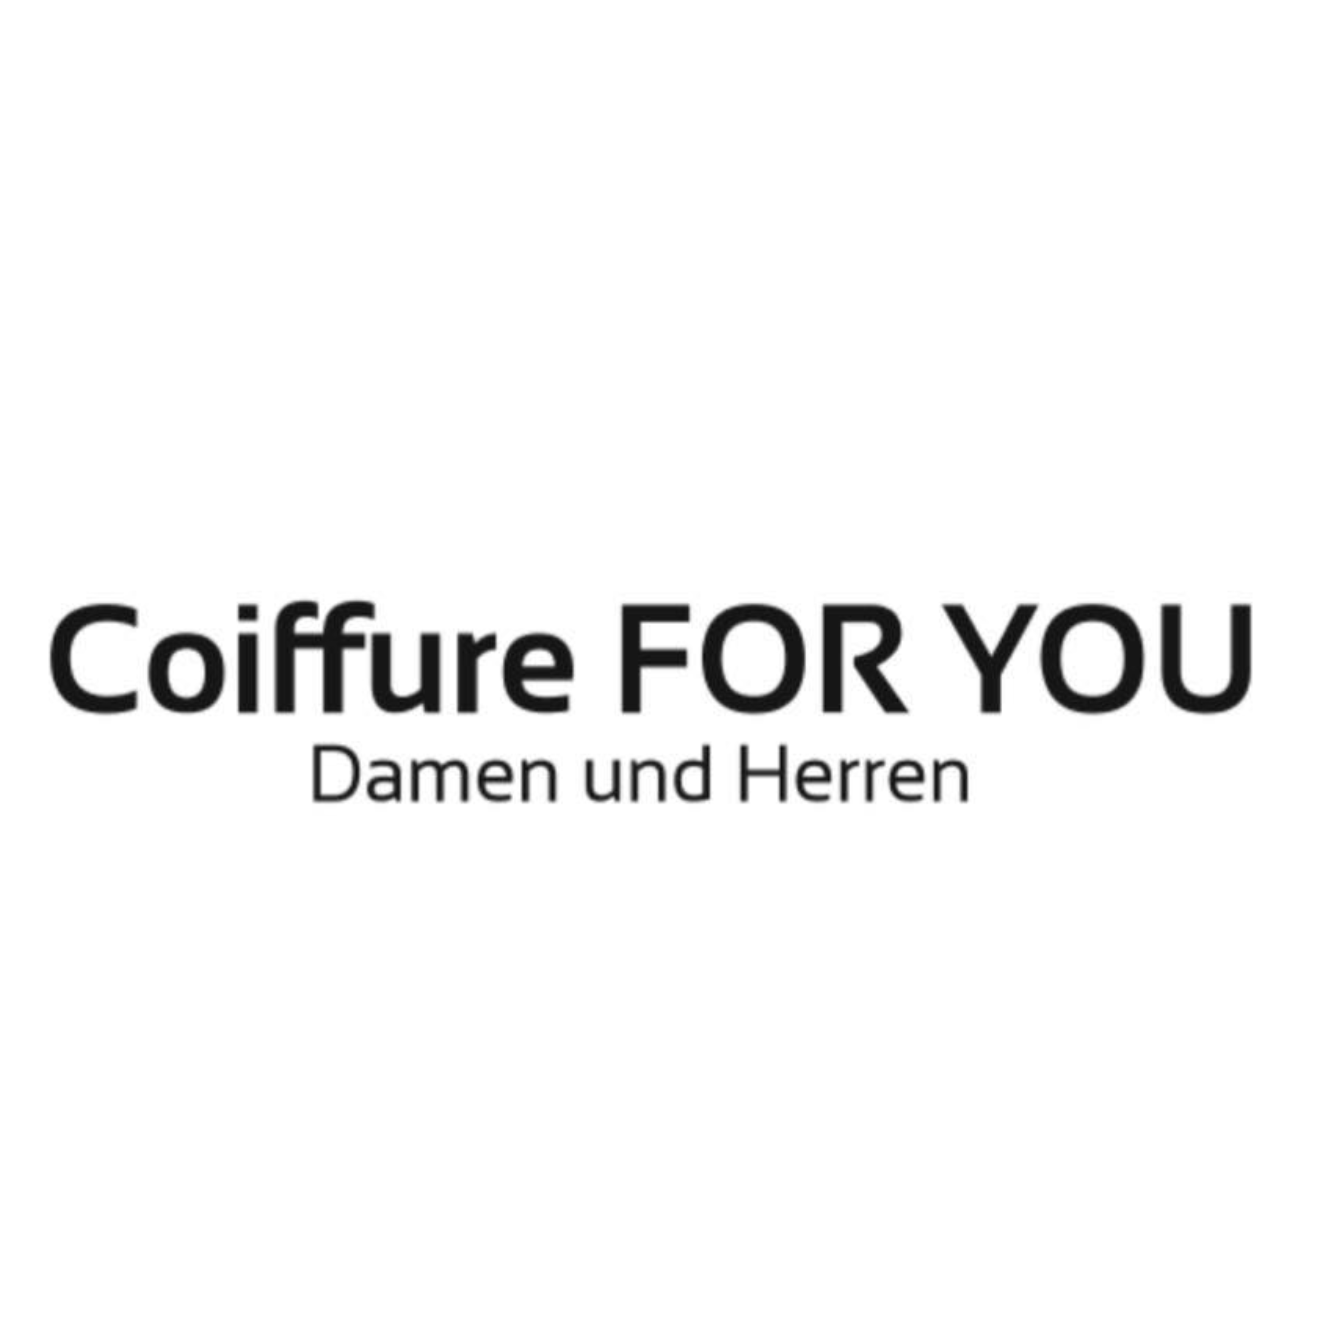 Coiffure FOR YOU Logo